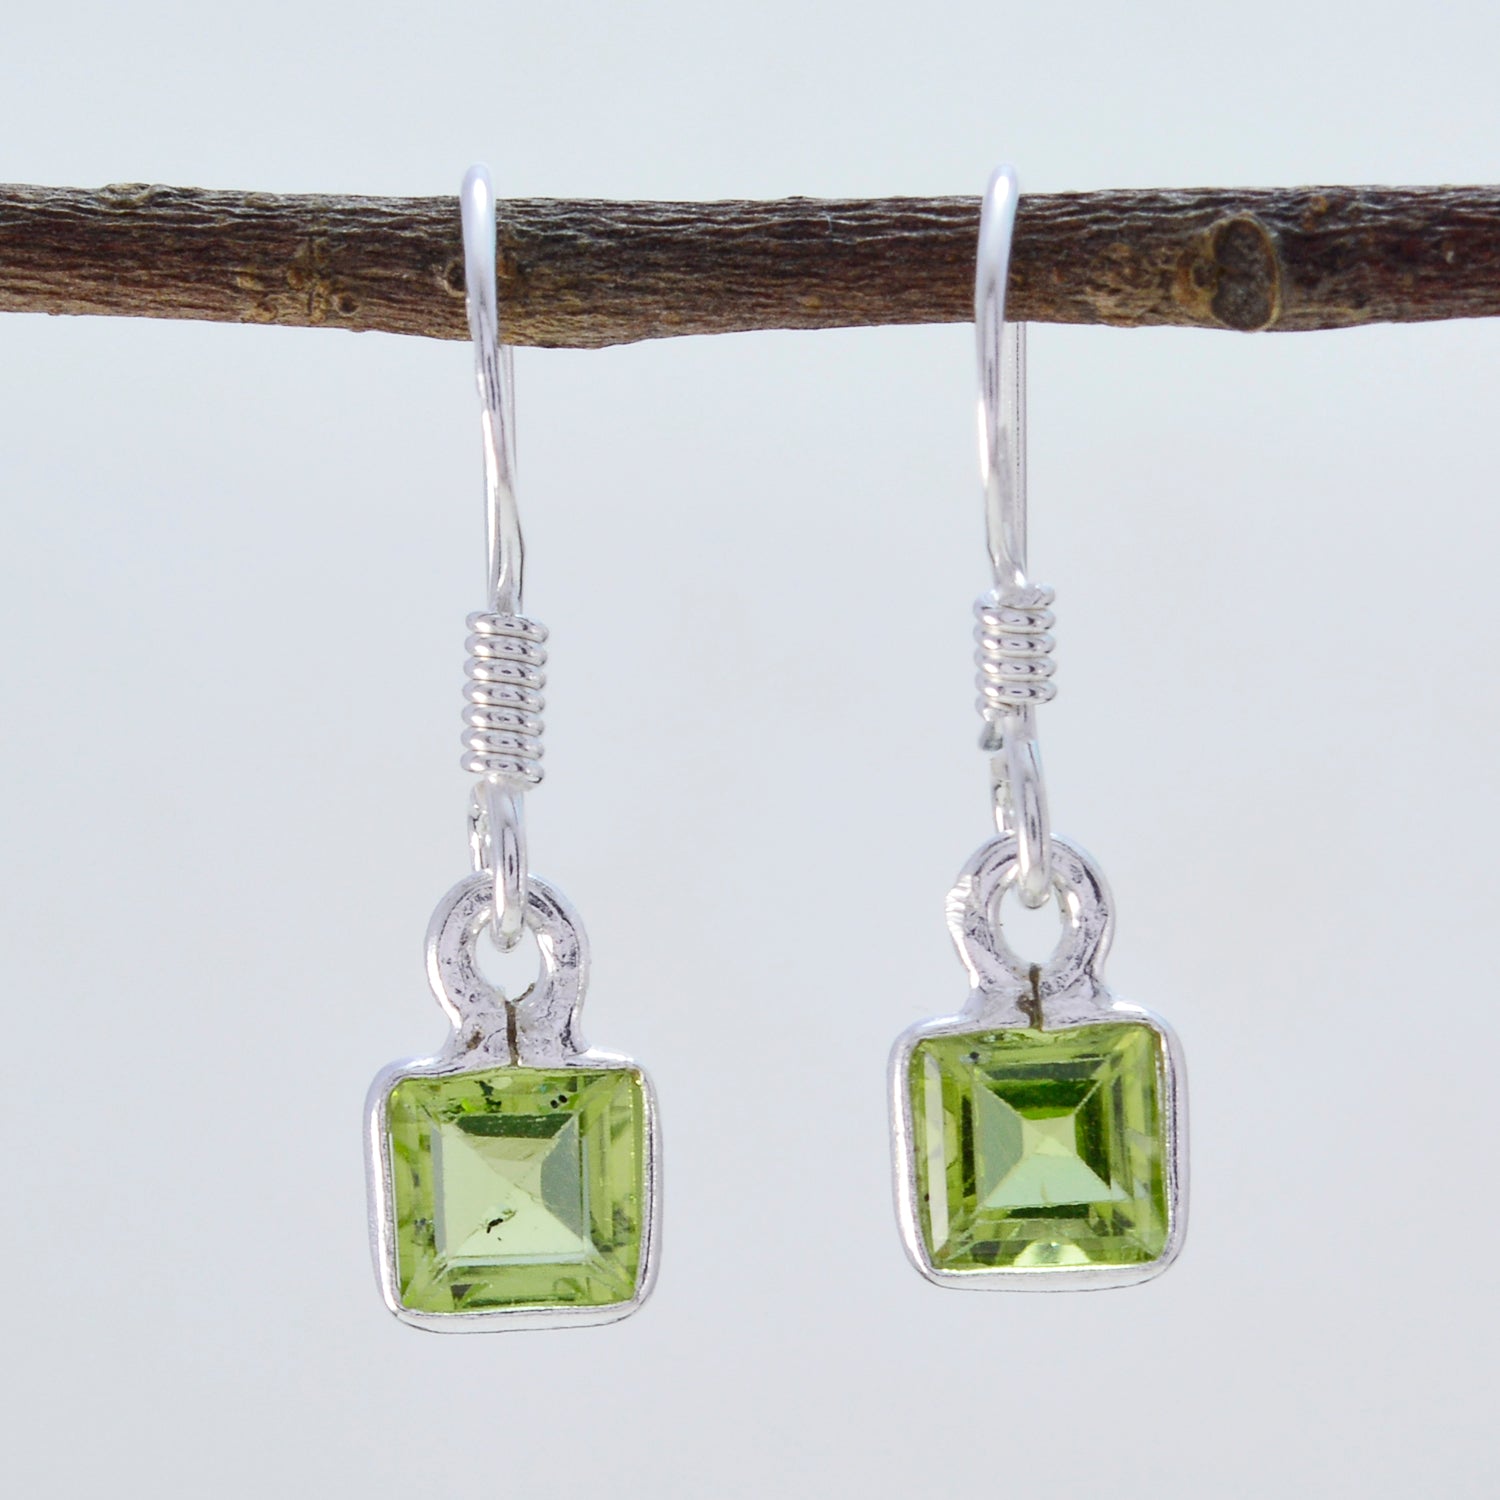 Riyo Good Gemstones square Faceted Green Peridot Silver Earrings wedding gift